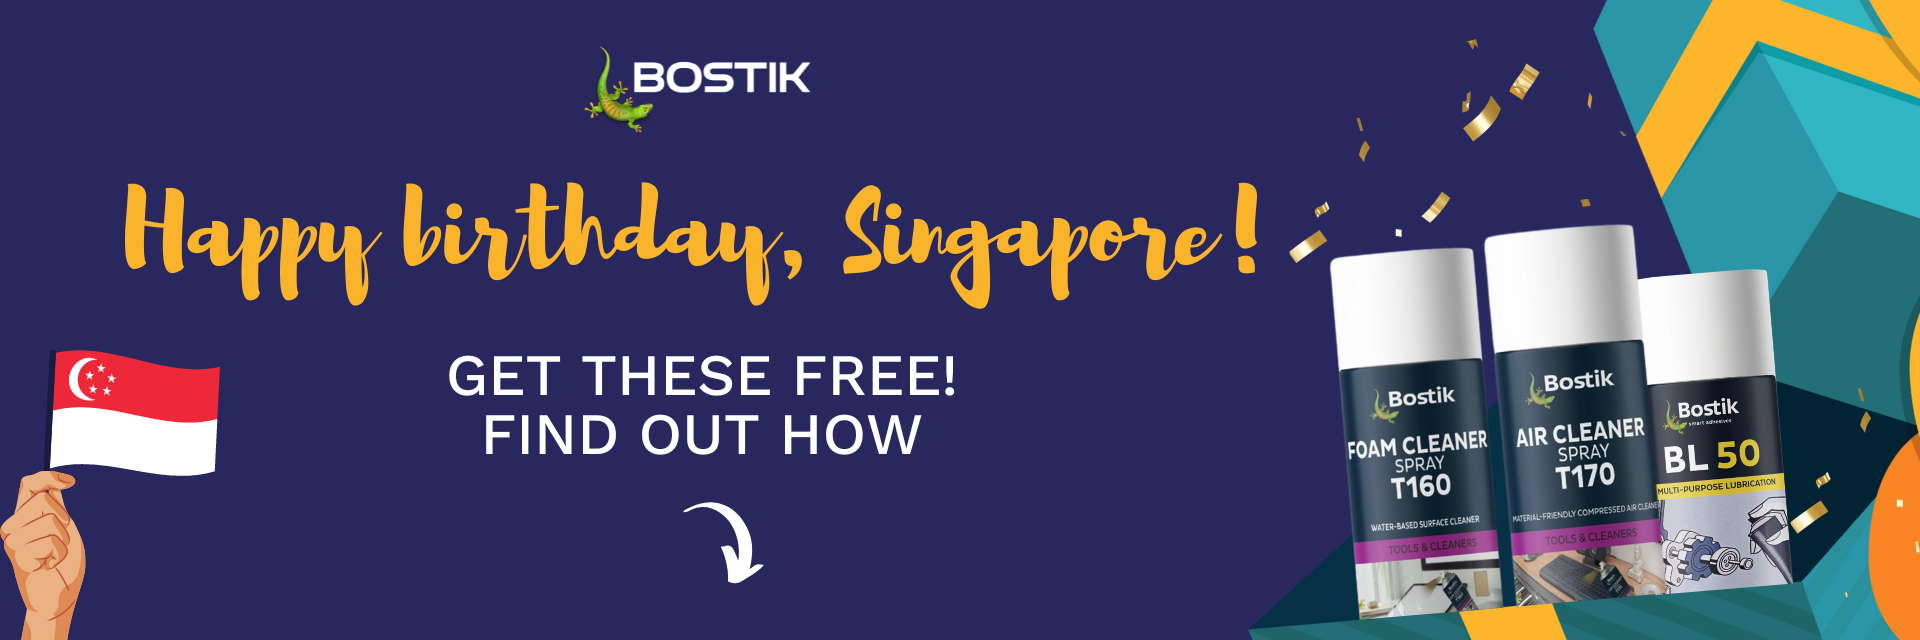 Bostik DIY Singapore campaign national day banner